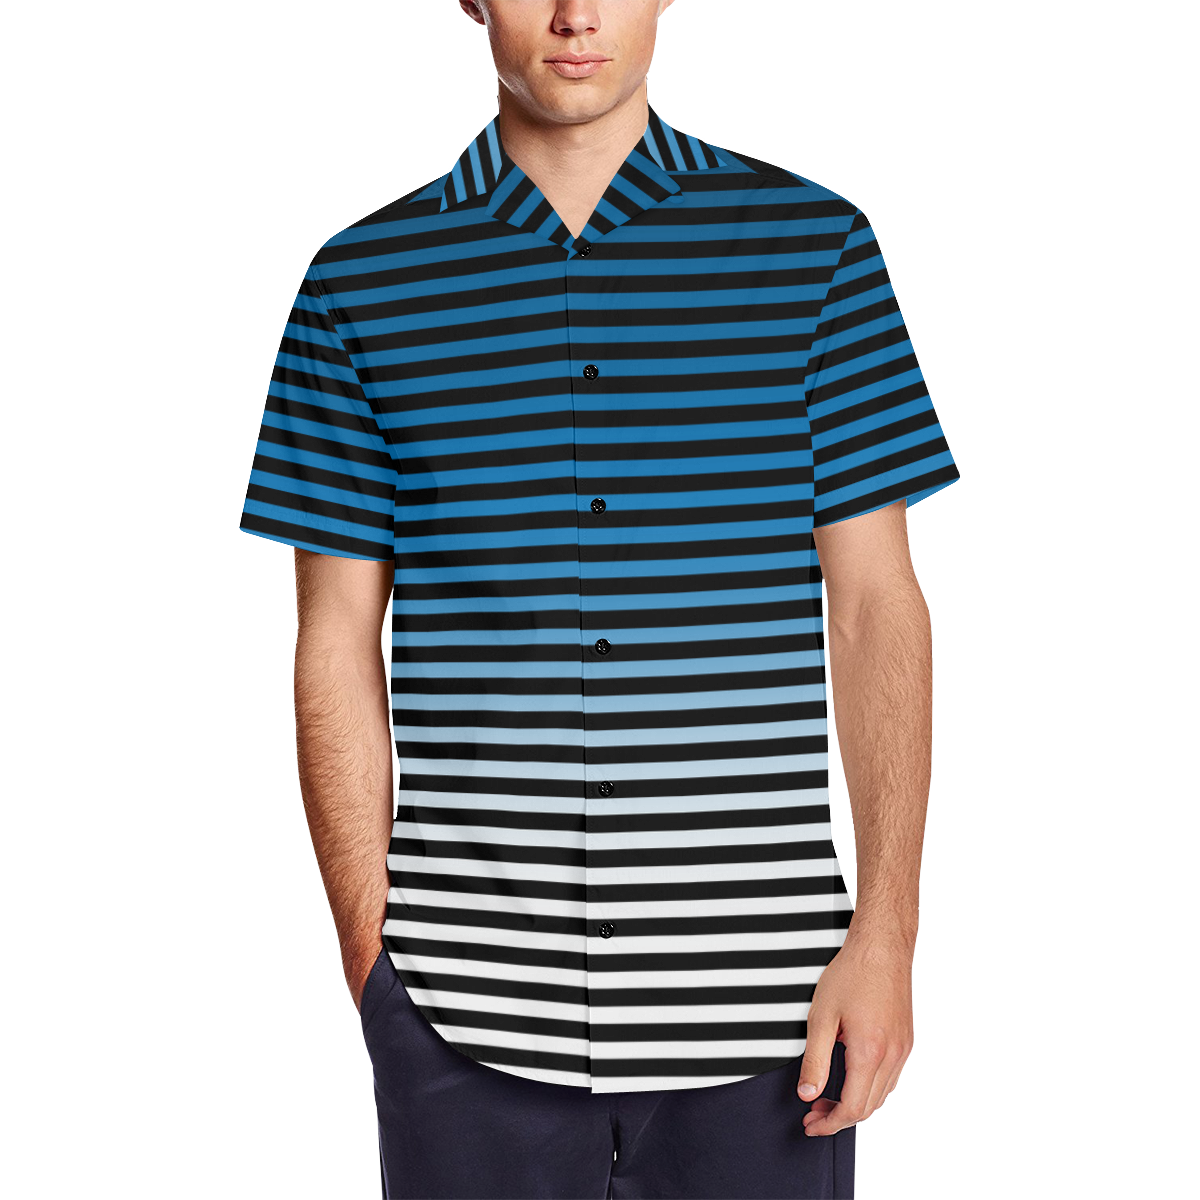 Stripes Fade Blue, Black Men's Short Sleeve Shirt with Lapel Collar (Model T54)